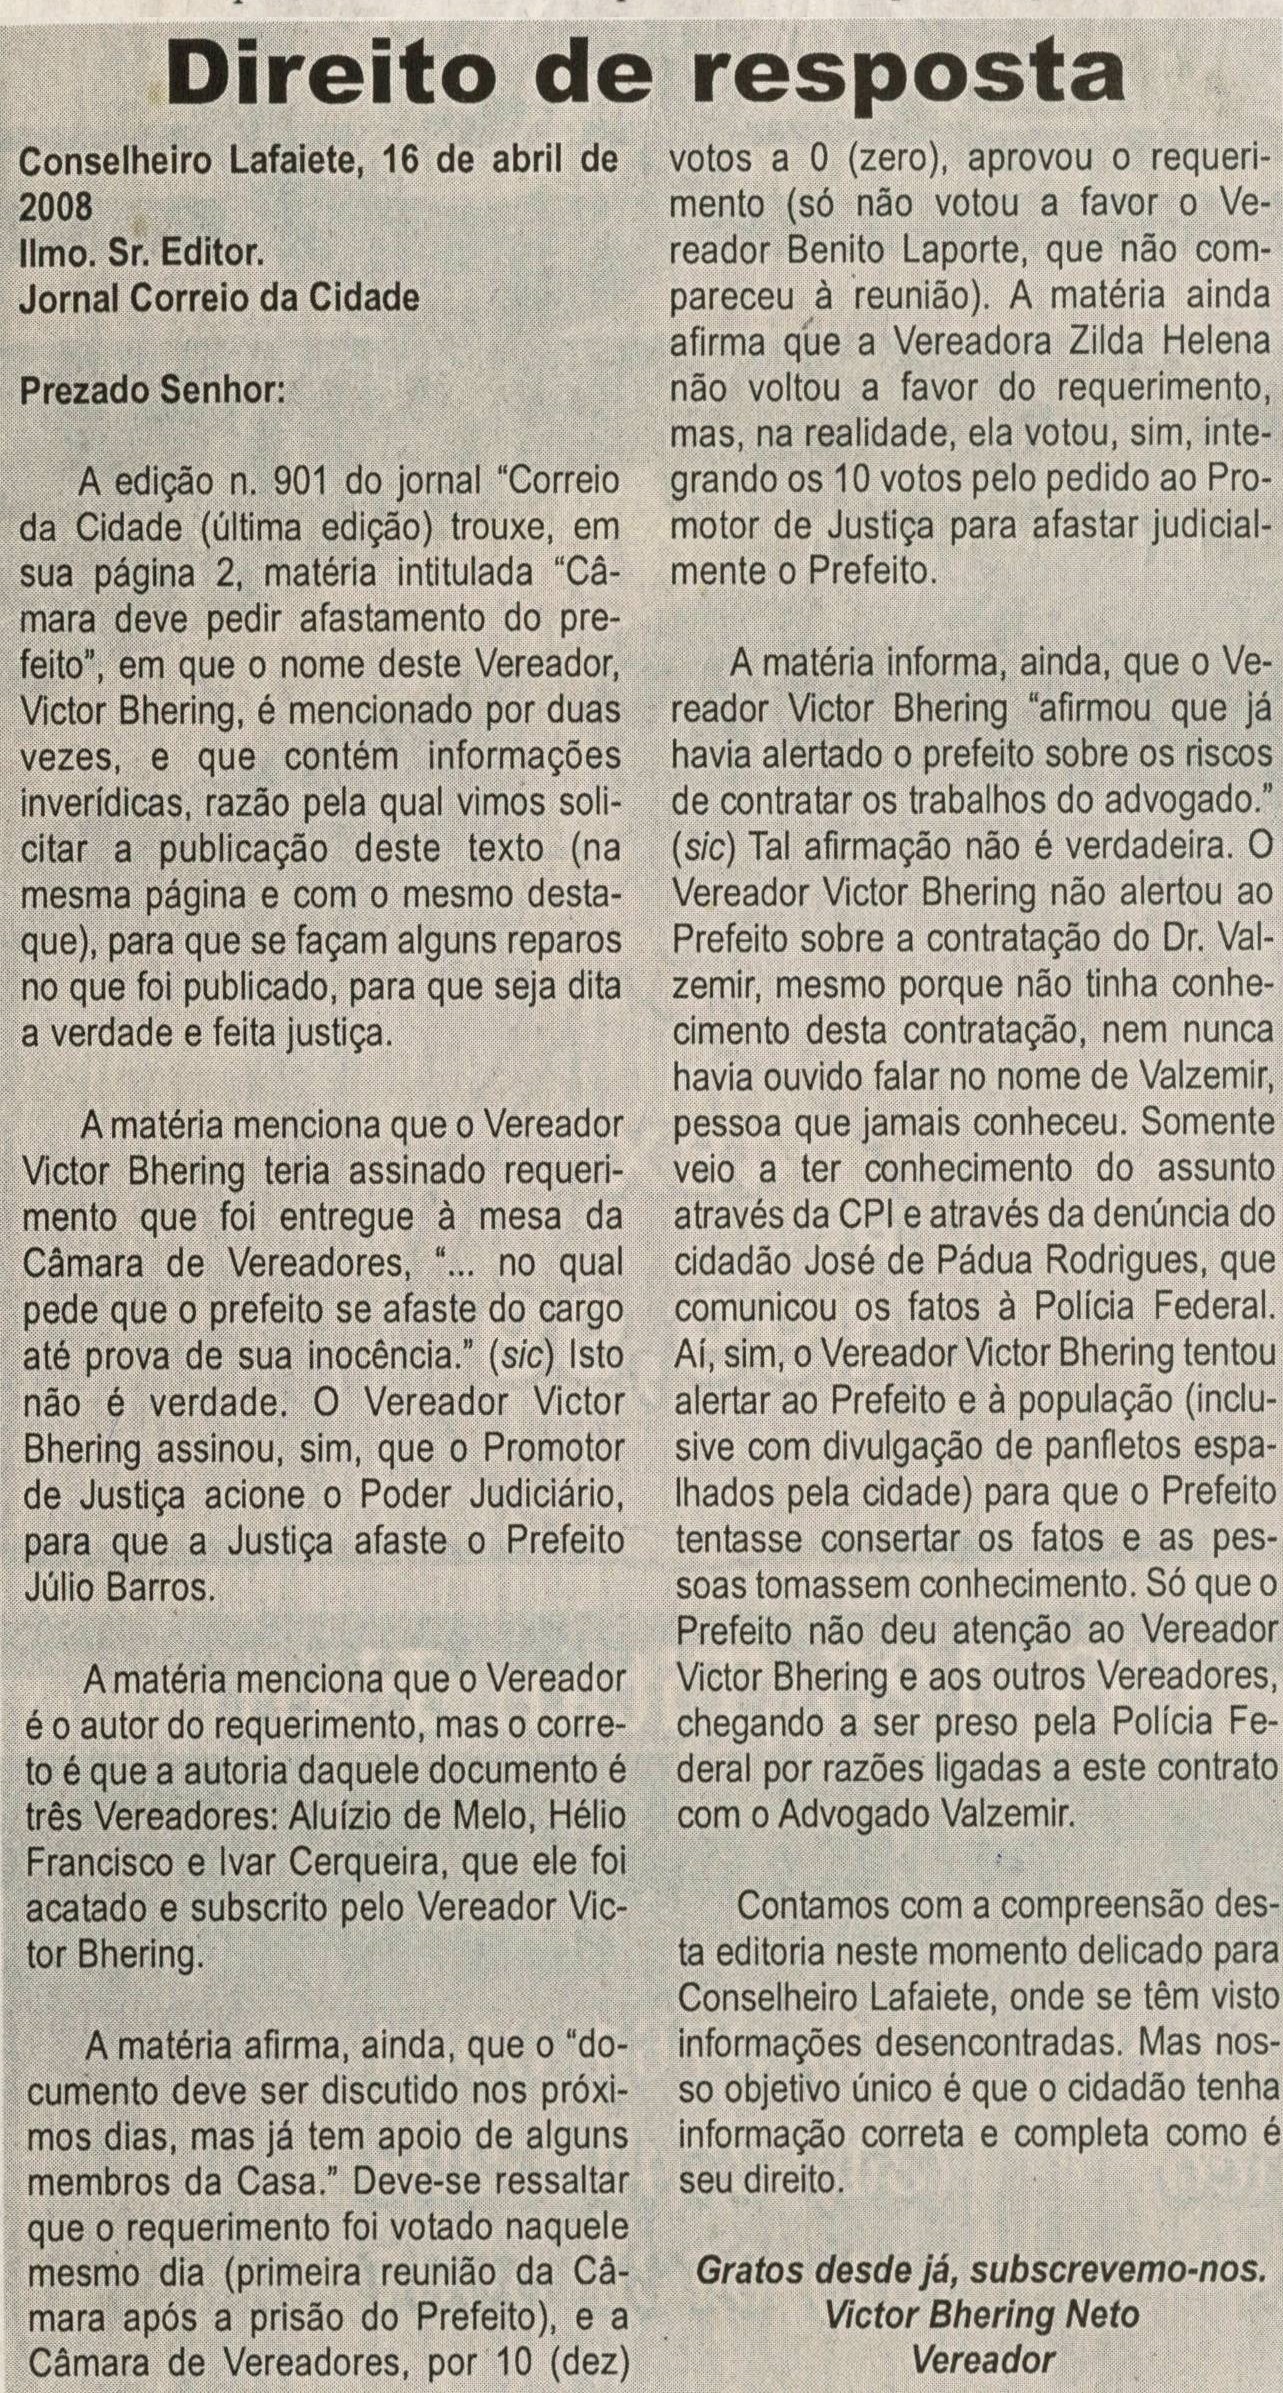 Direito de Resposta. Correio de Minas, Conselheiro Lafaiete, 14 jun. 2008, p. 02.